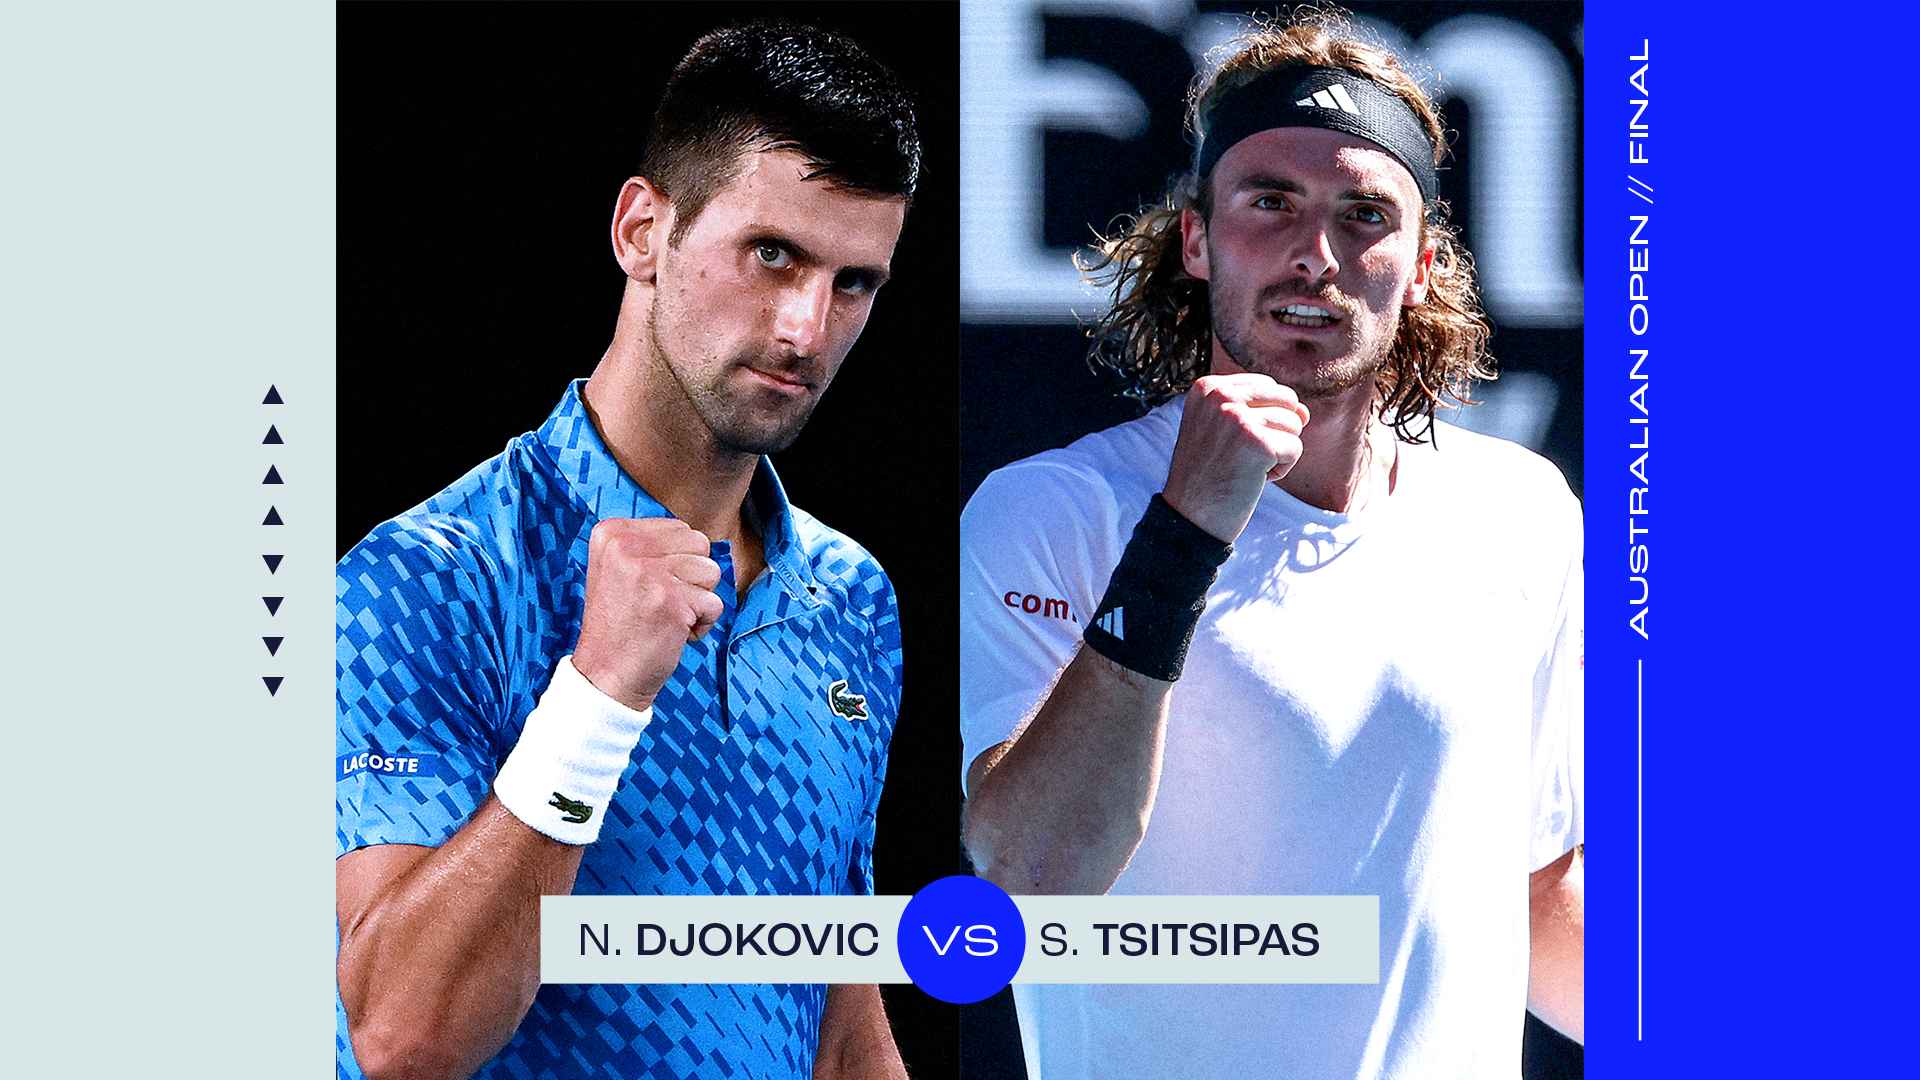 Novak Djokovic leads Stefanos Tsitsipas 10-2 in the pair's ATP Head2Head series, including nine straight wins entering the Melbourne final.